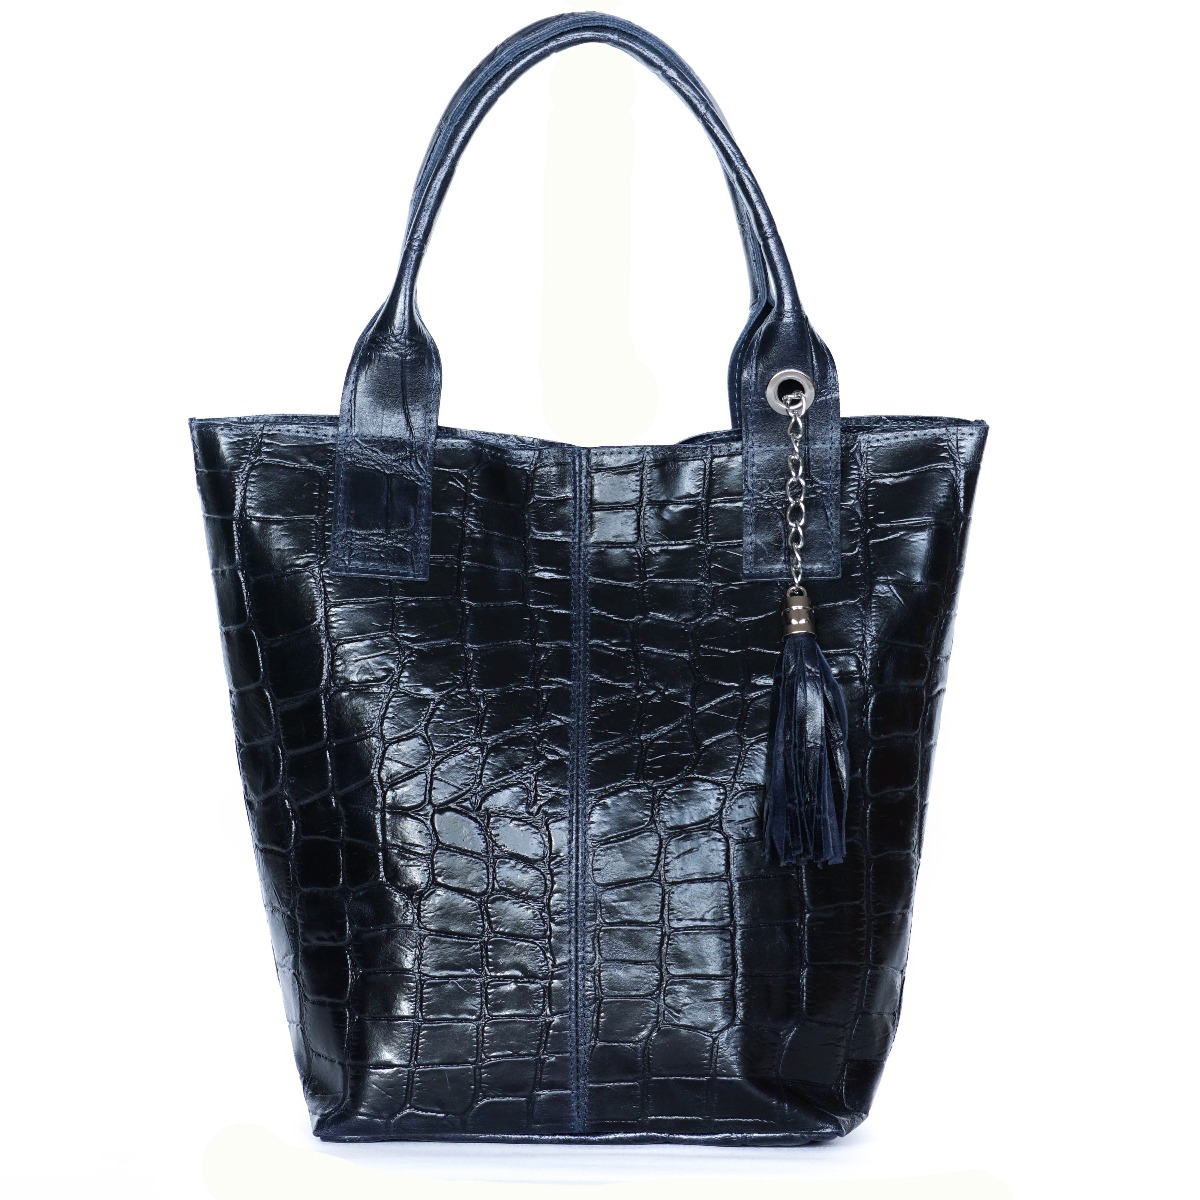 Big genuine leather women tote bag dark blue